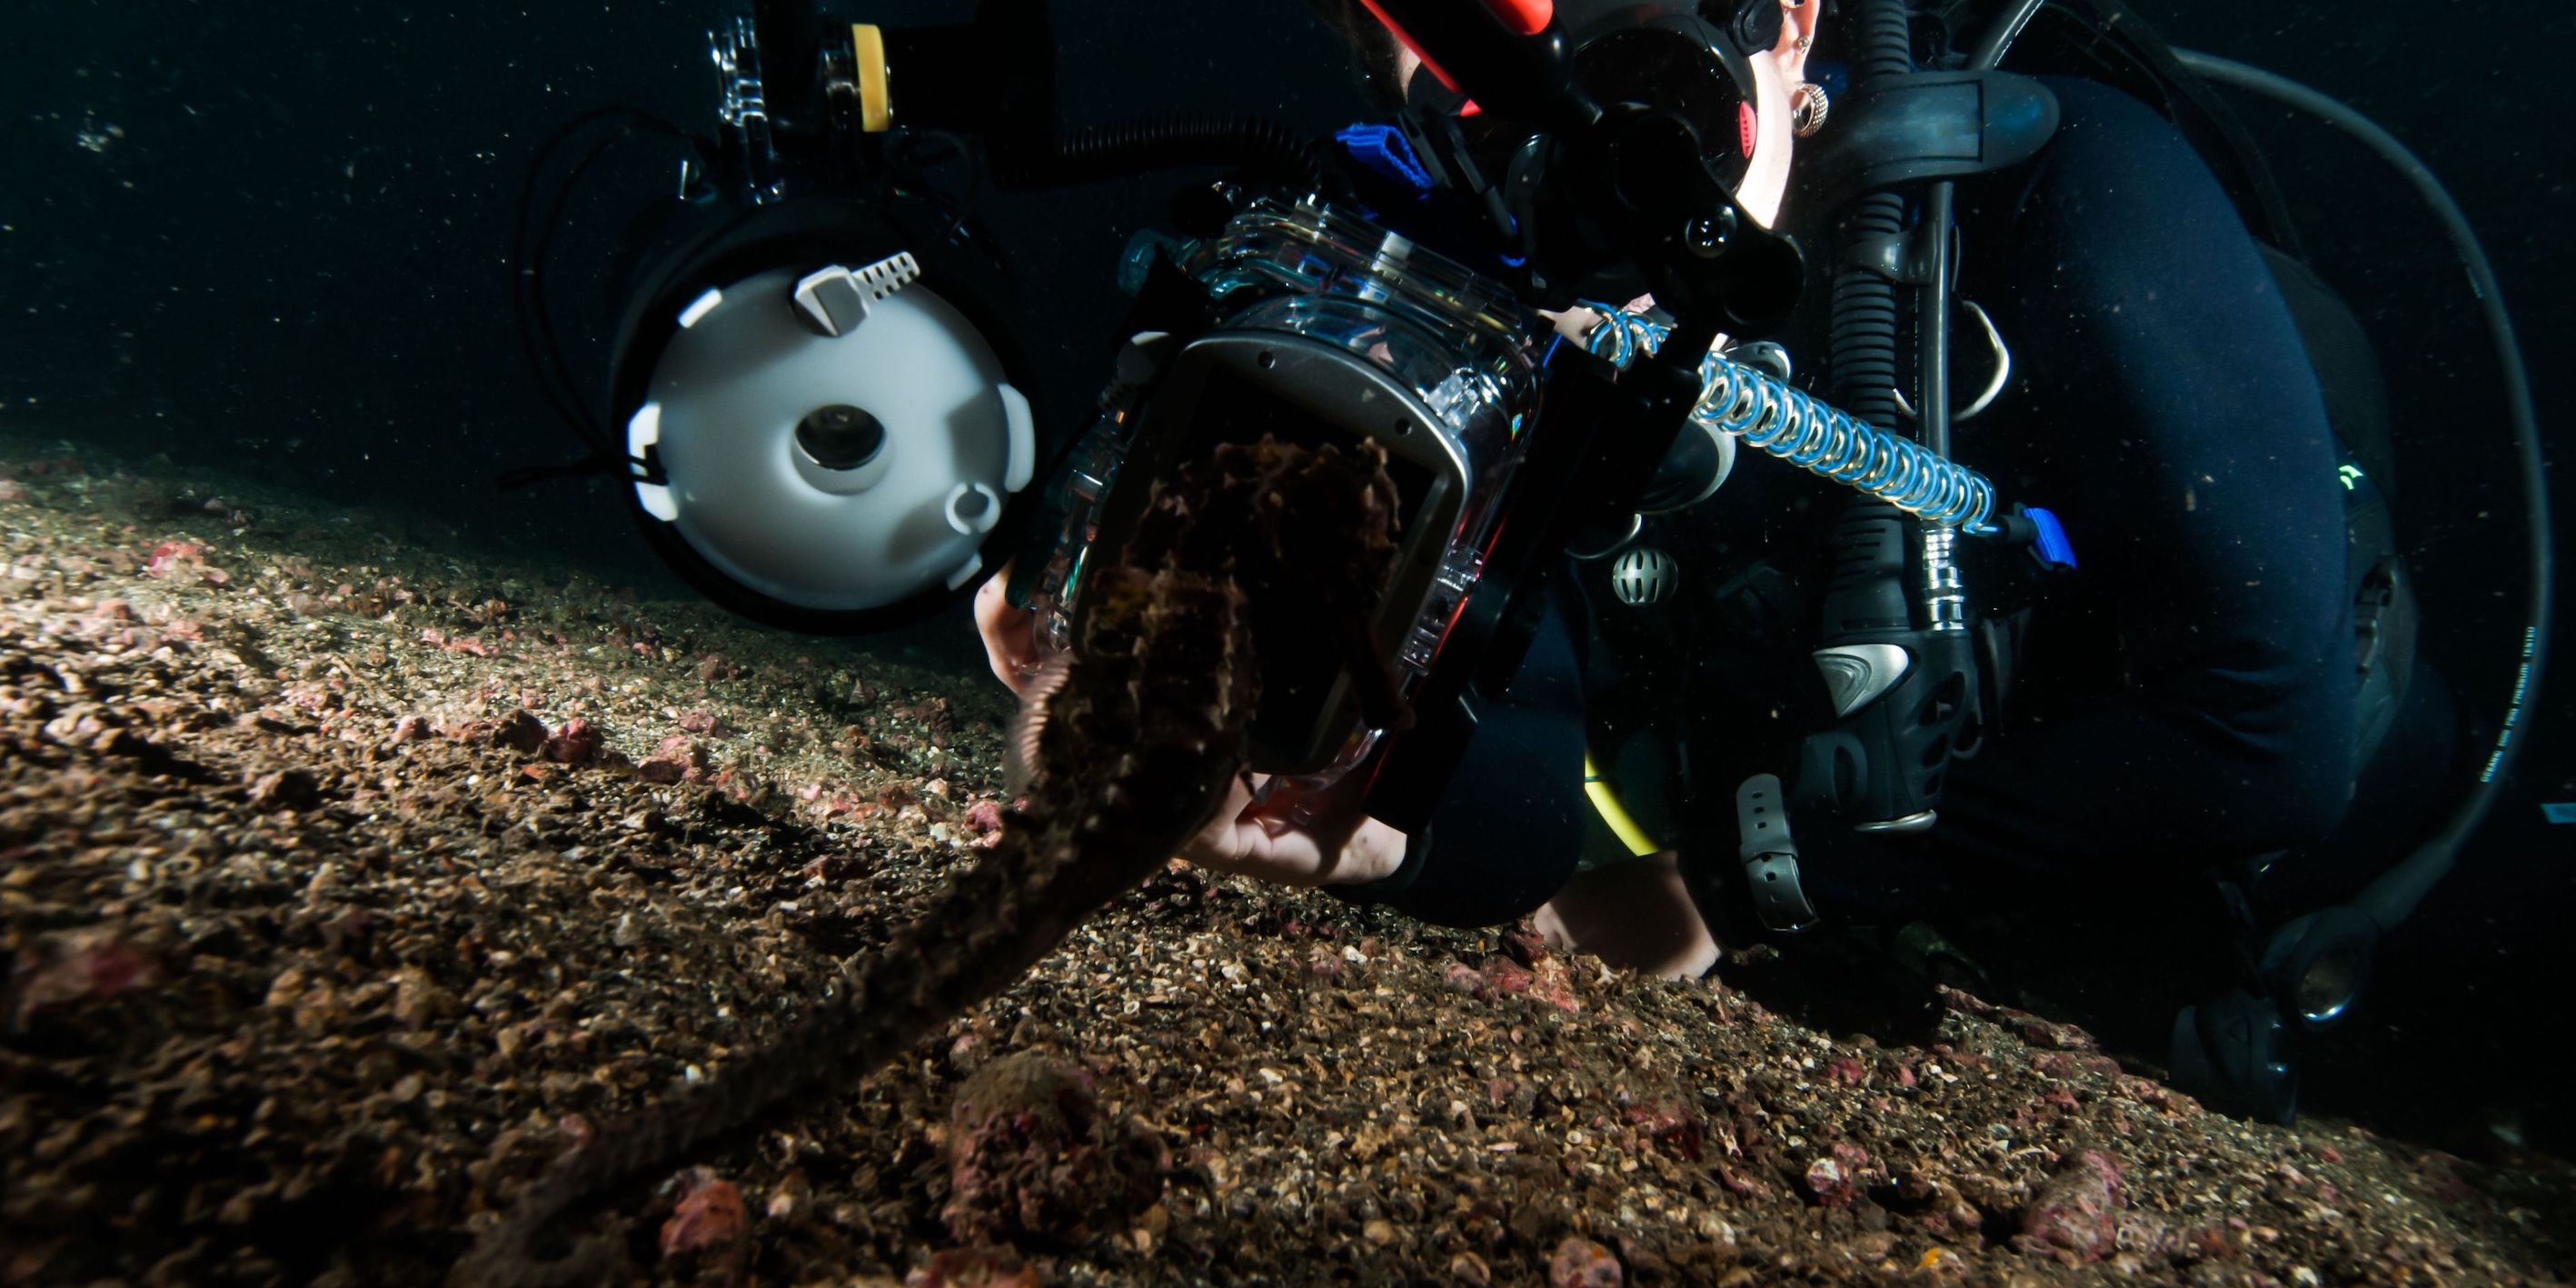 The fundamentals of underwater macro photography